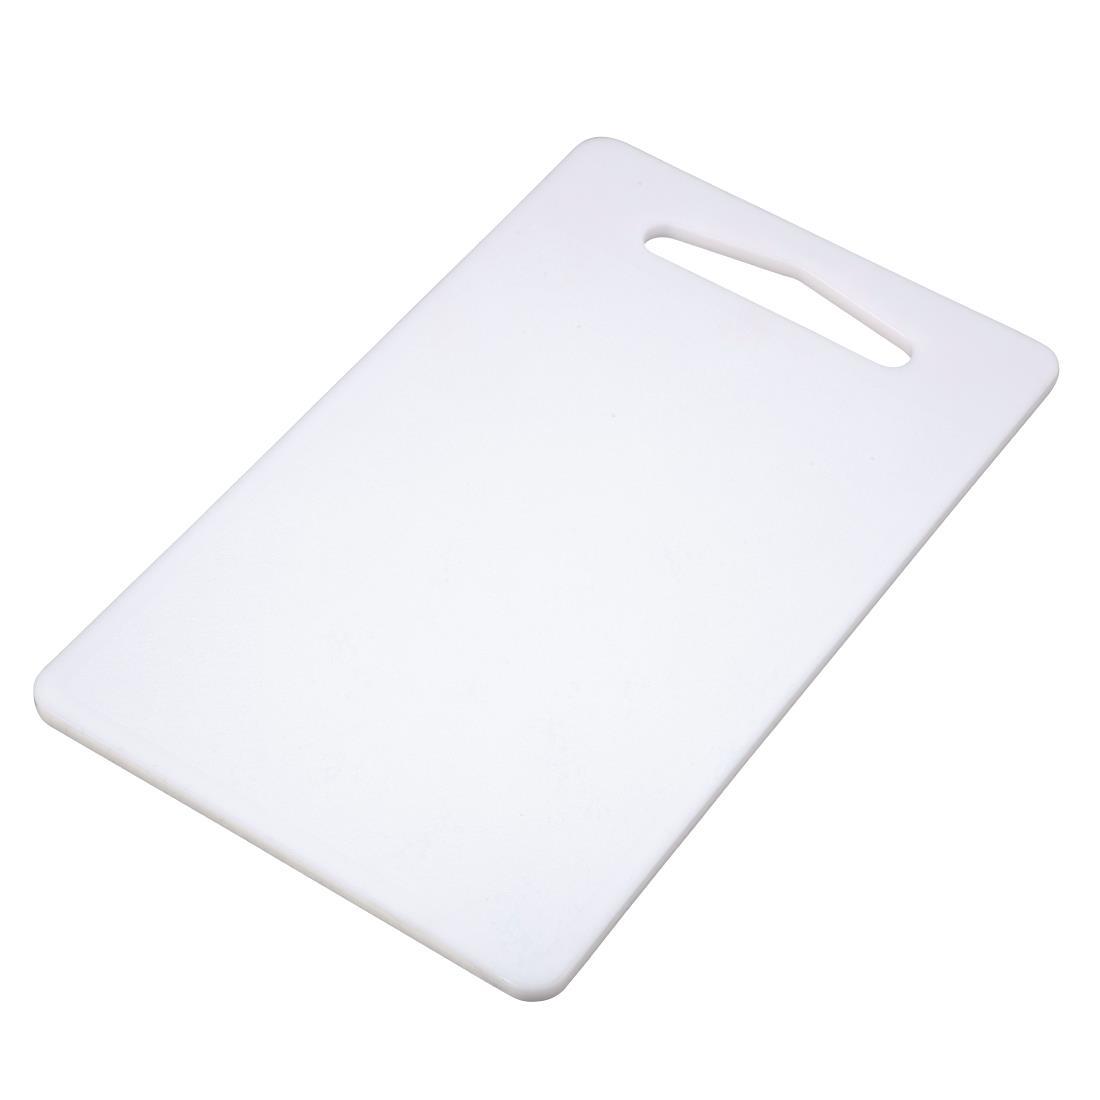 Hygiplas Low Density Cutting Board White - CD269  - 2